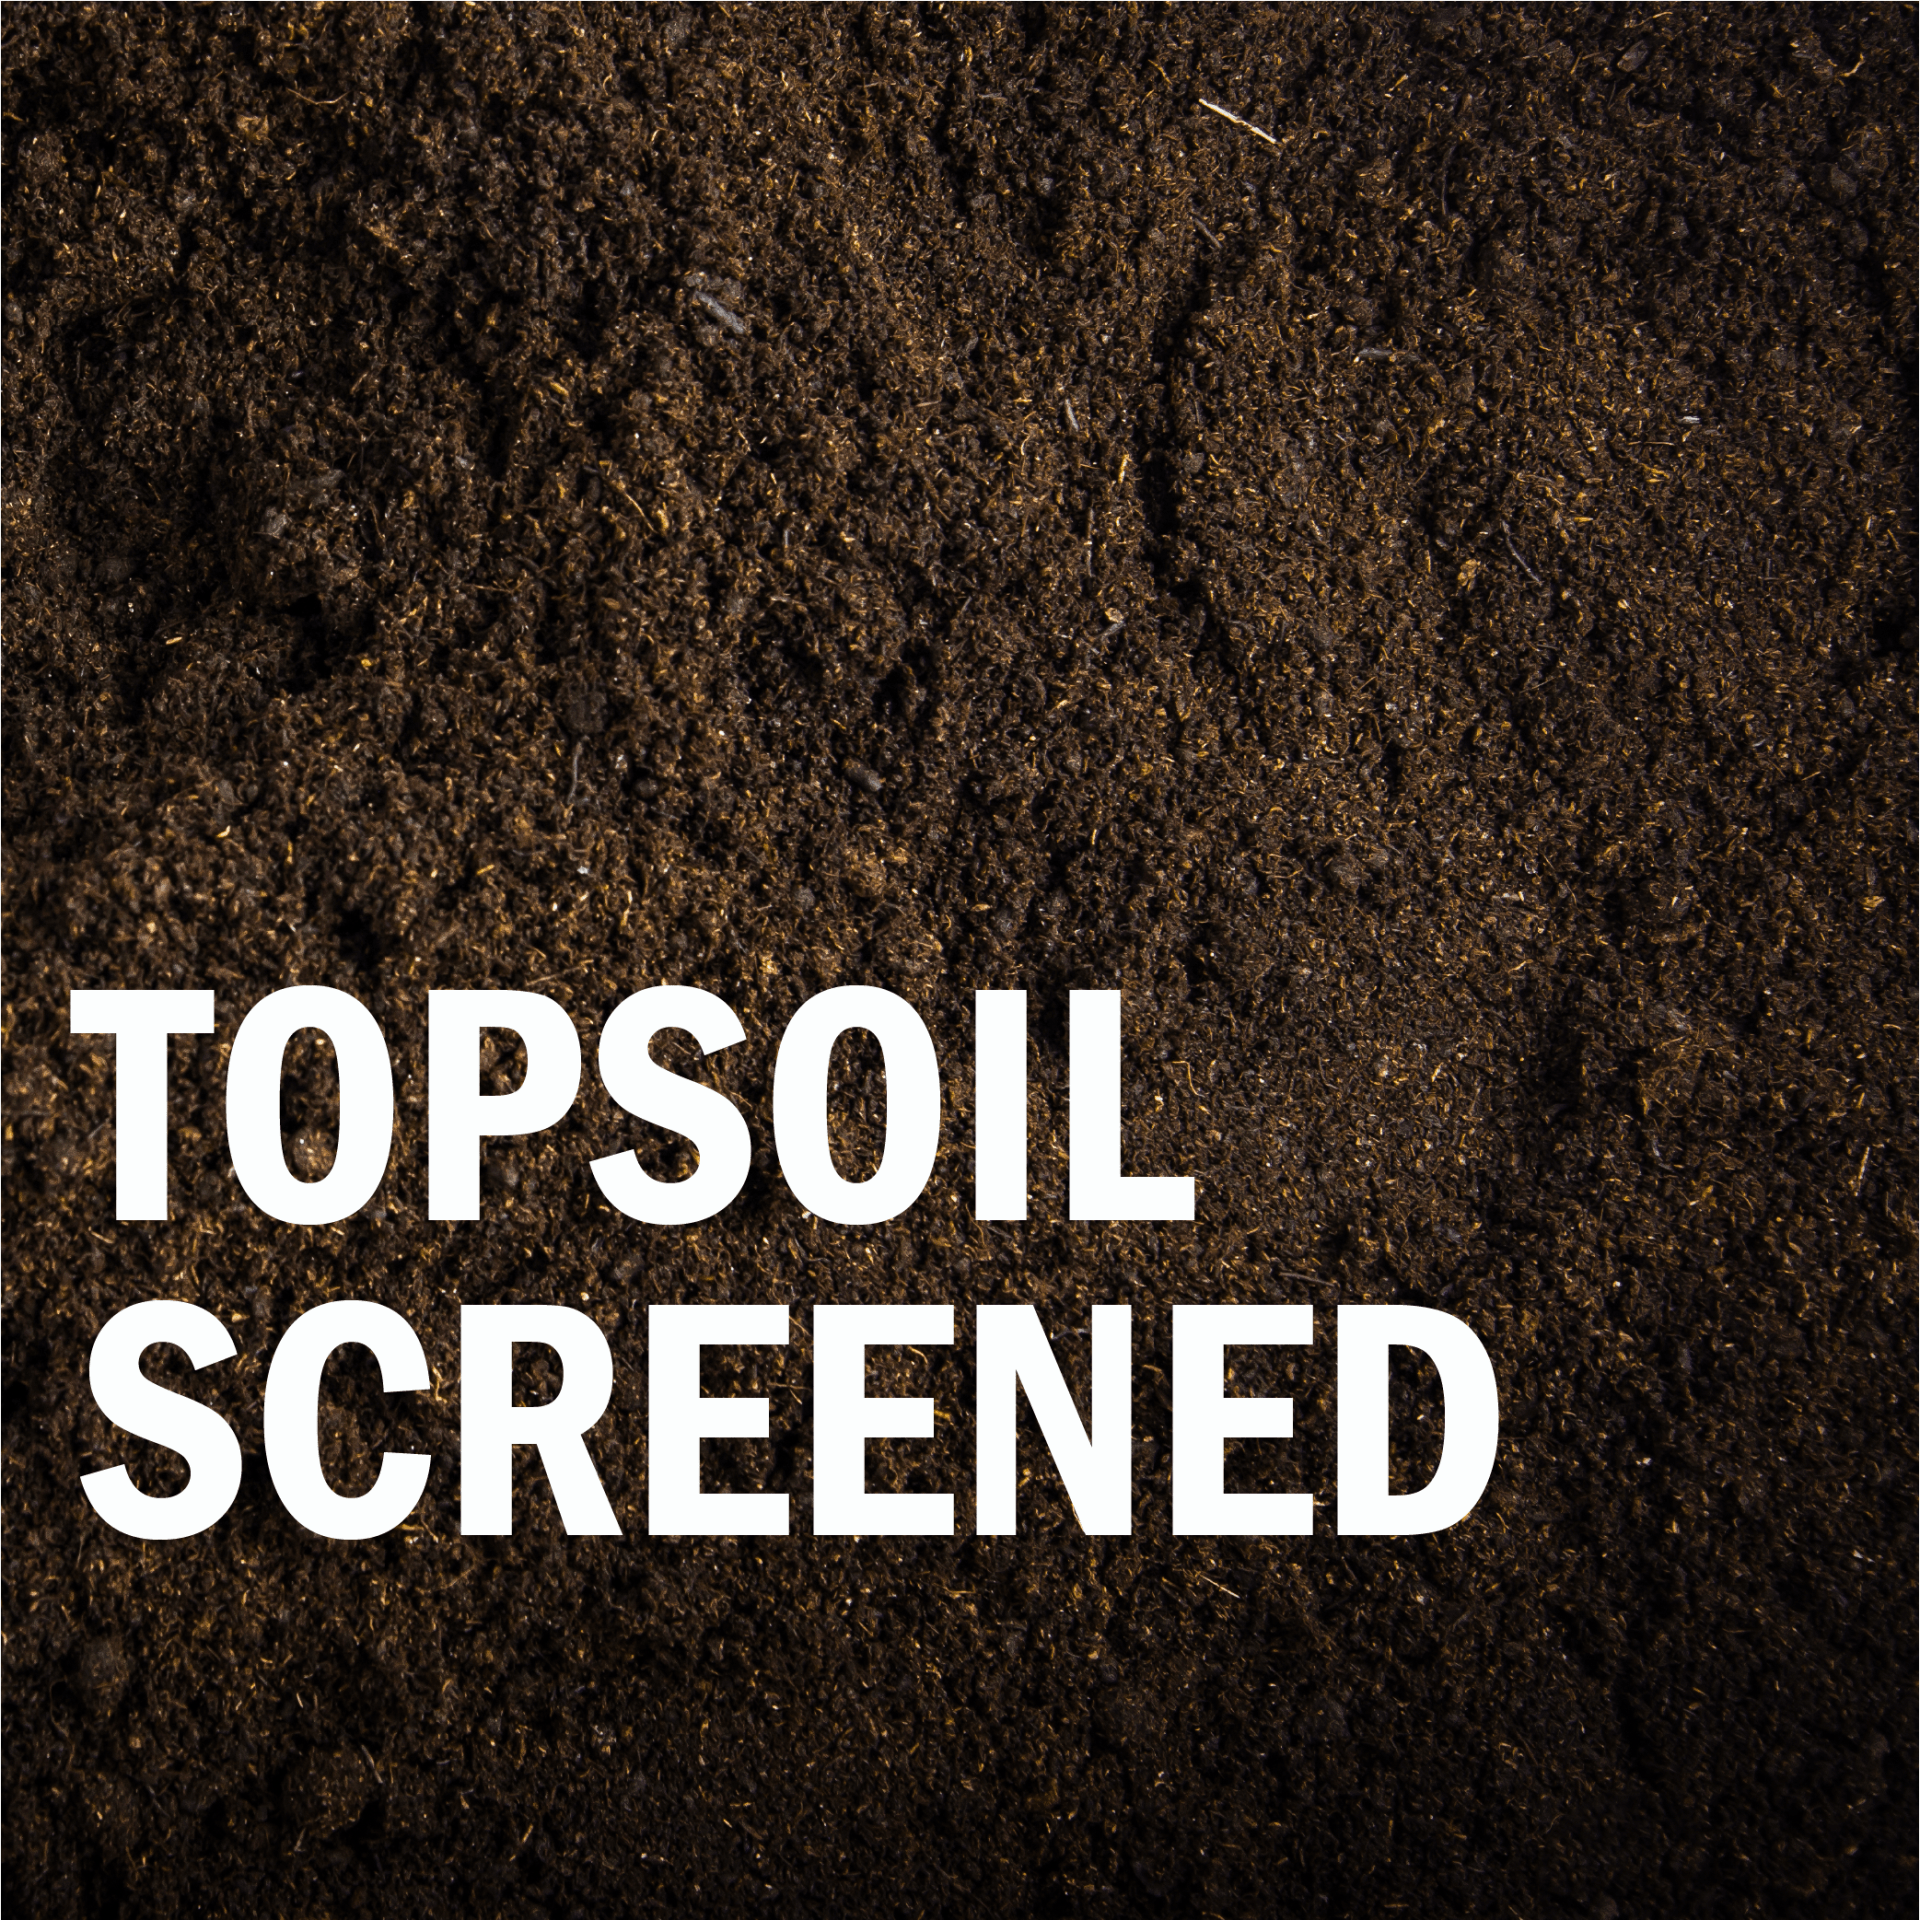 Screen+Top+Soil-16948649-1920w.png